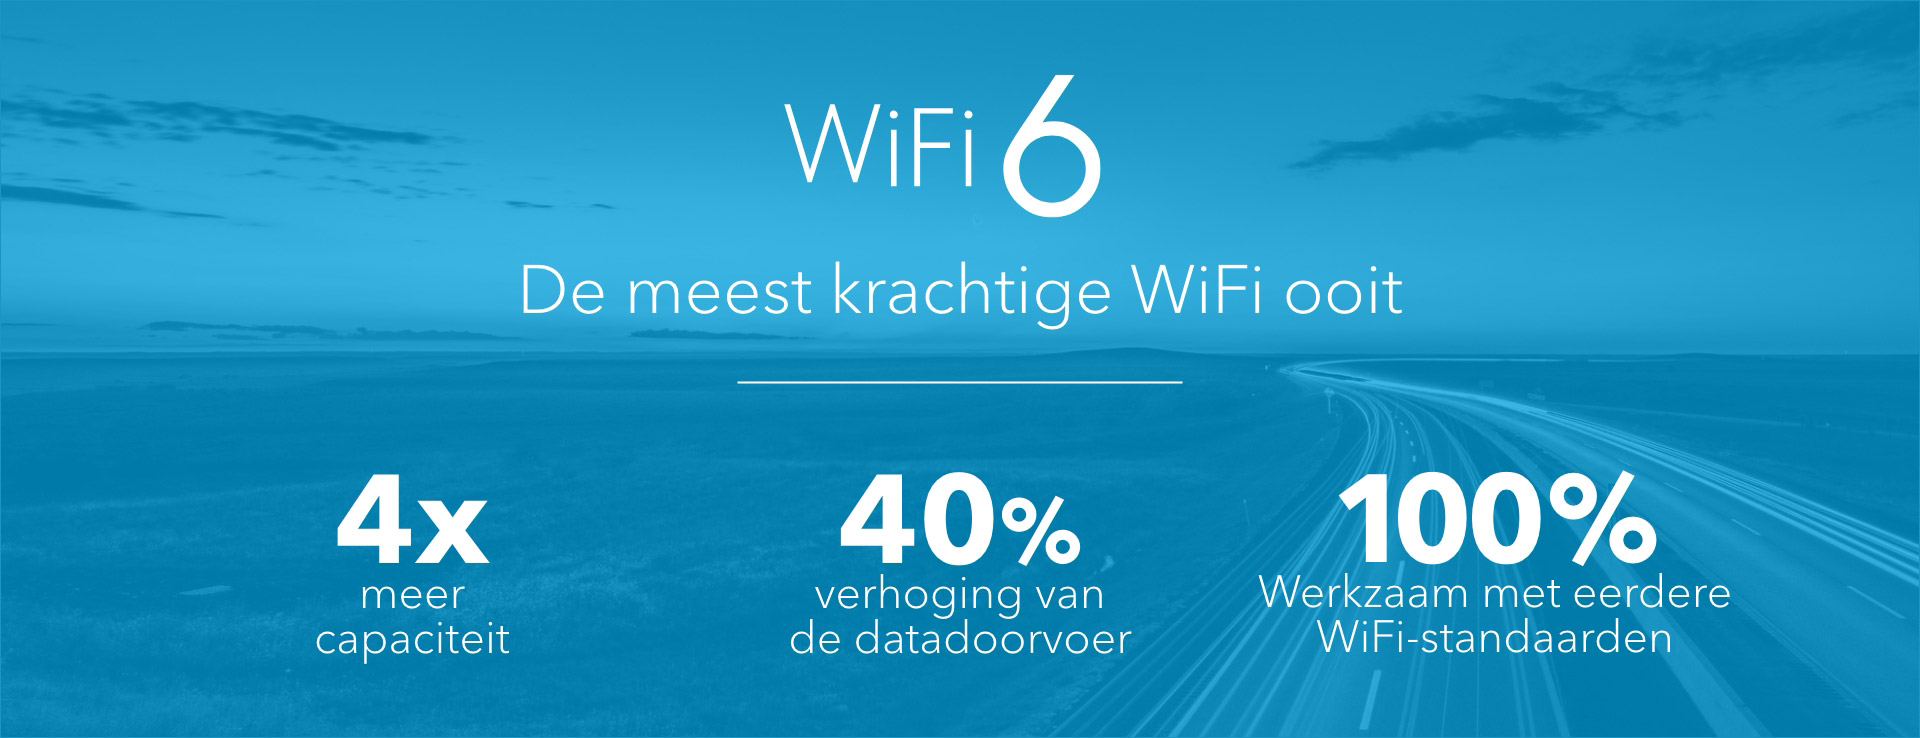 WiFi-6-2-nl